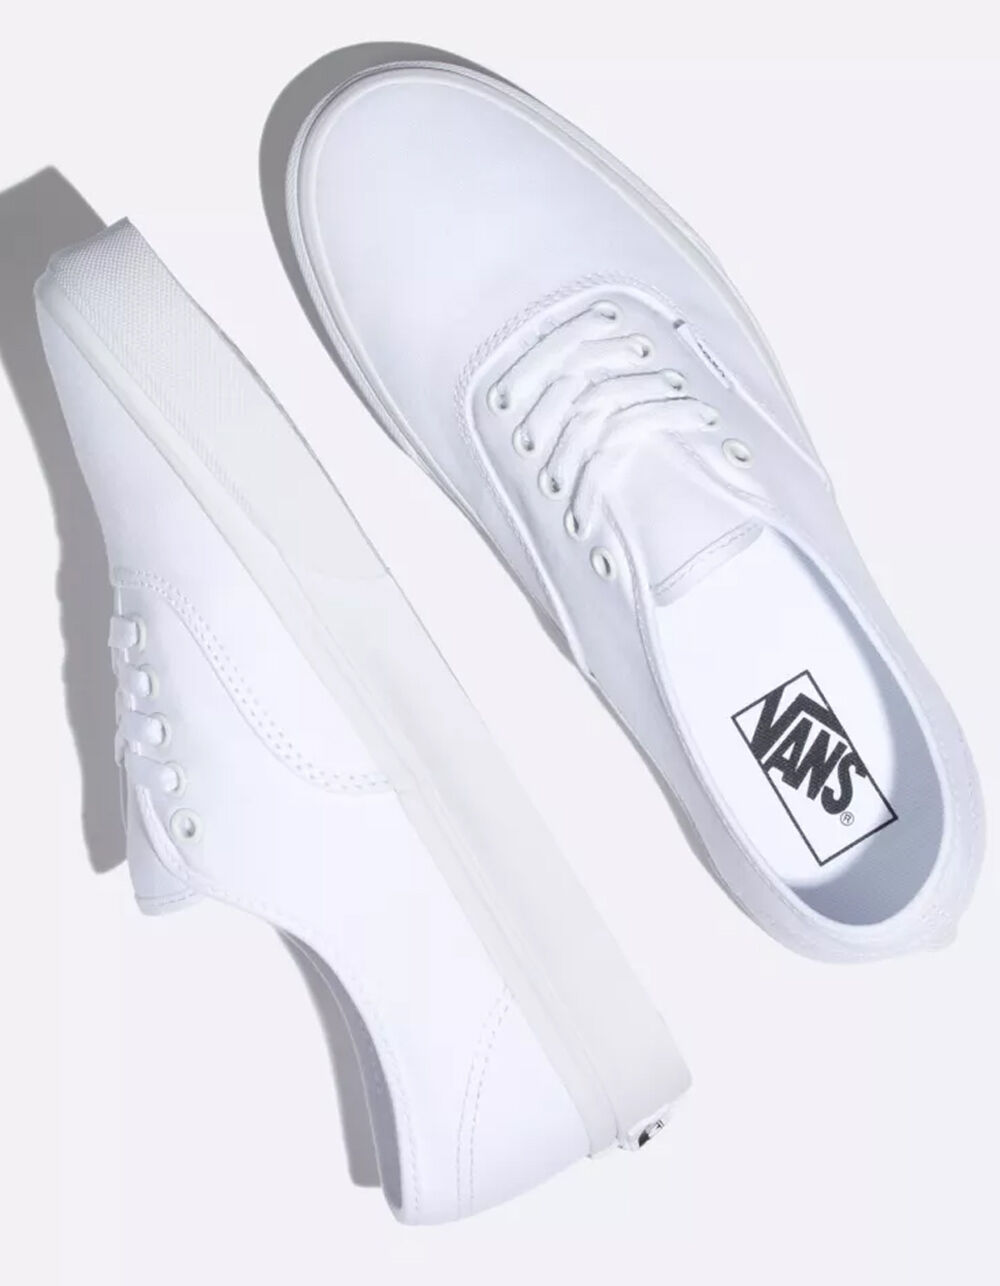 Vans Authentic Skate Shoe - True White